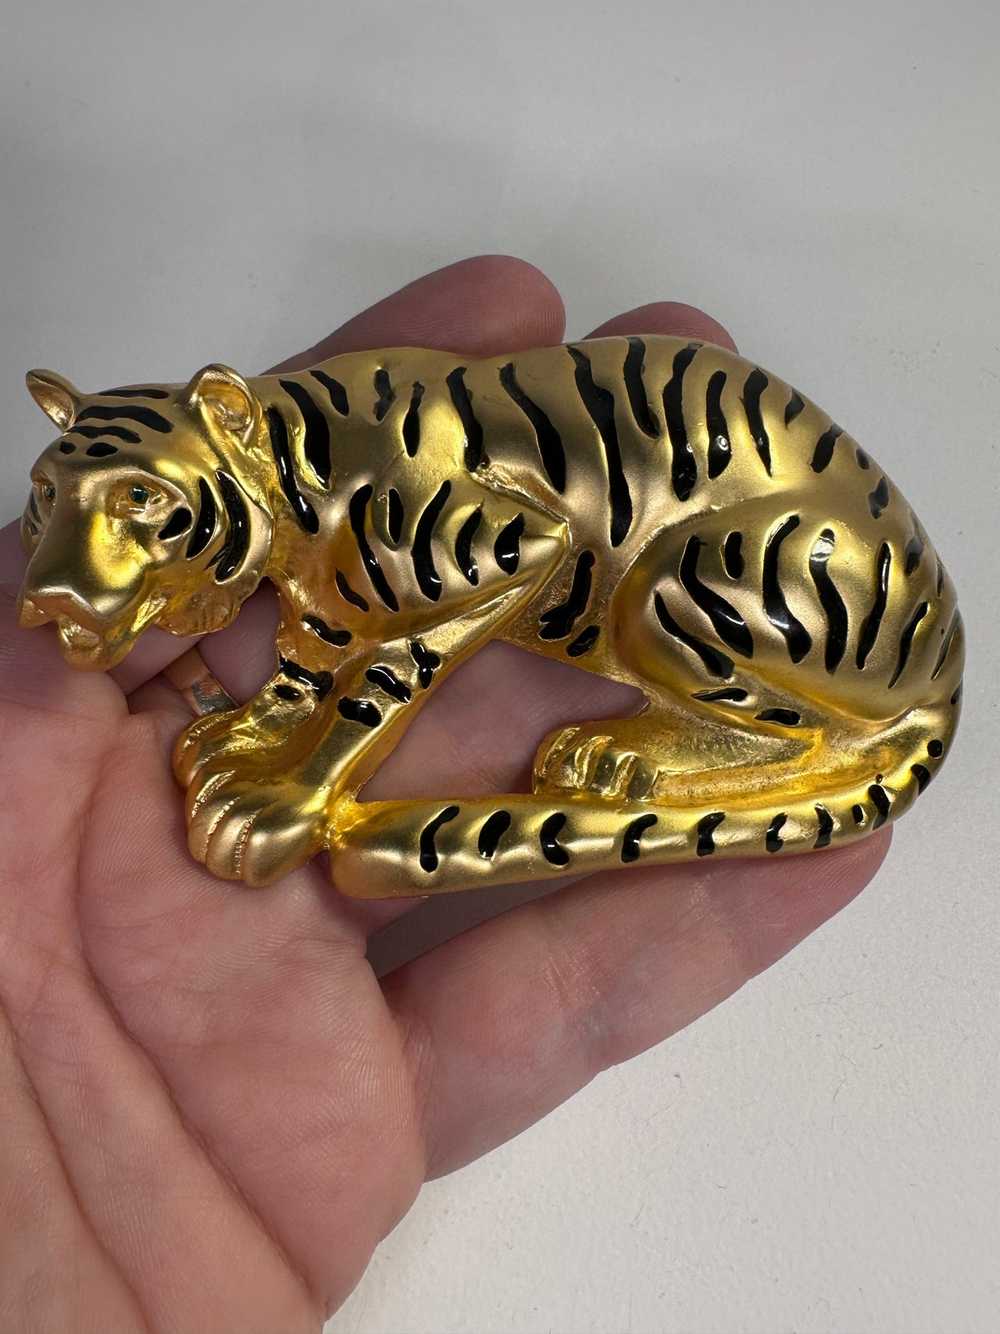 1980s Massive Gold Tiger Brooch - image 3